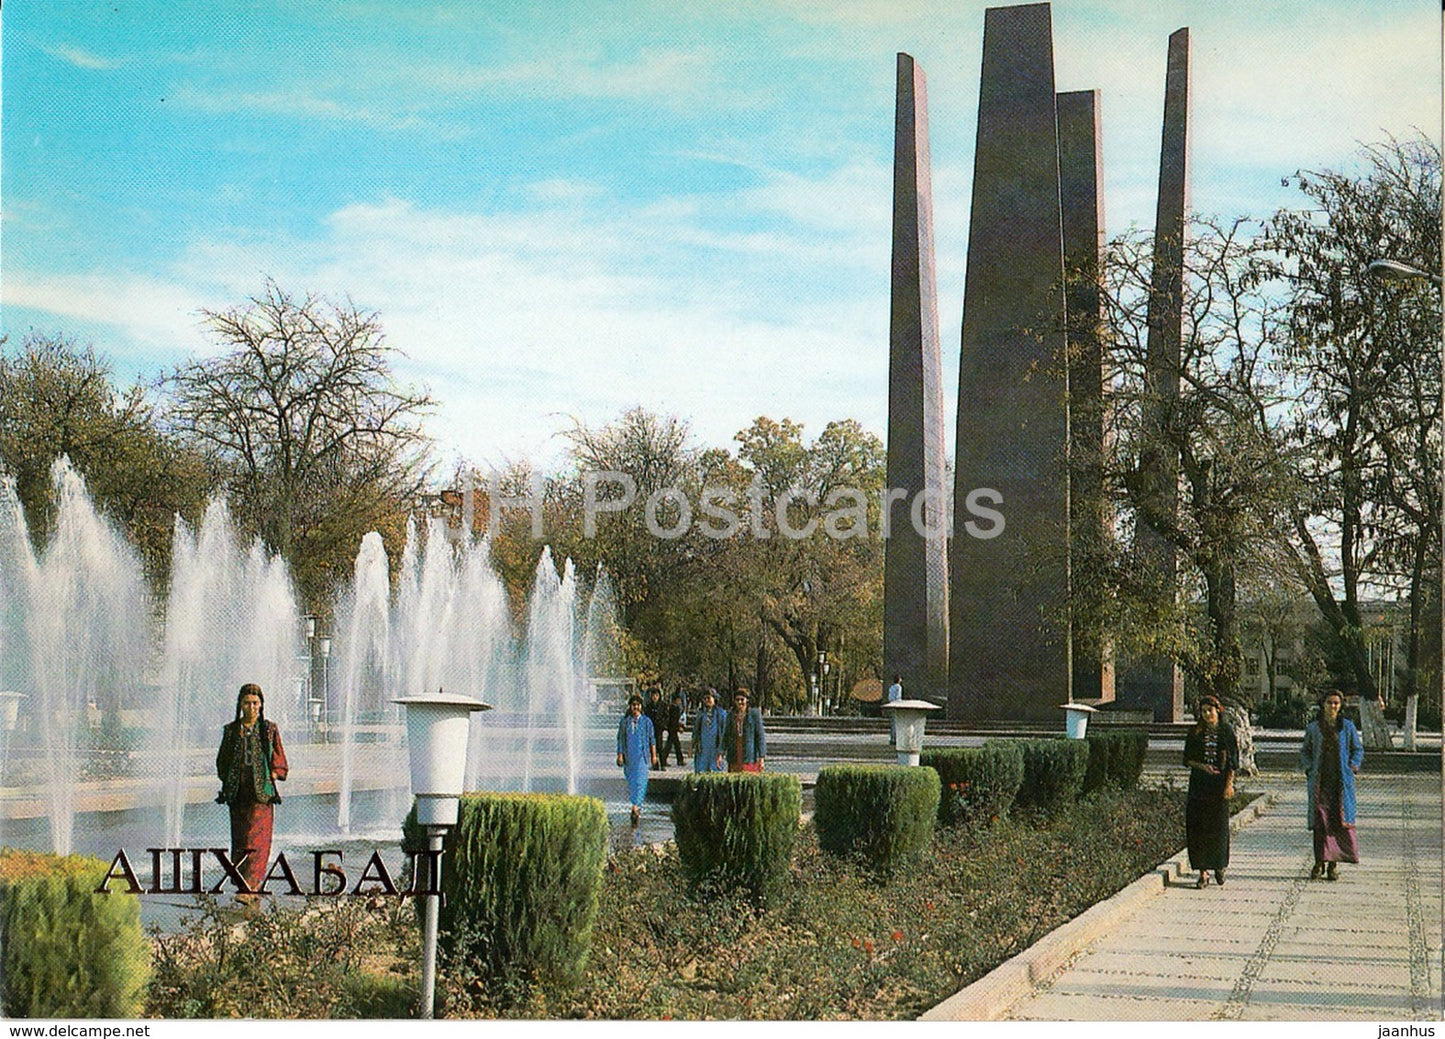 Ashgabat - Ashkhabad - monument to Turkmenian soldiers died in WWII - 1984 - Turkmenistan - unused - JH Postcards